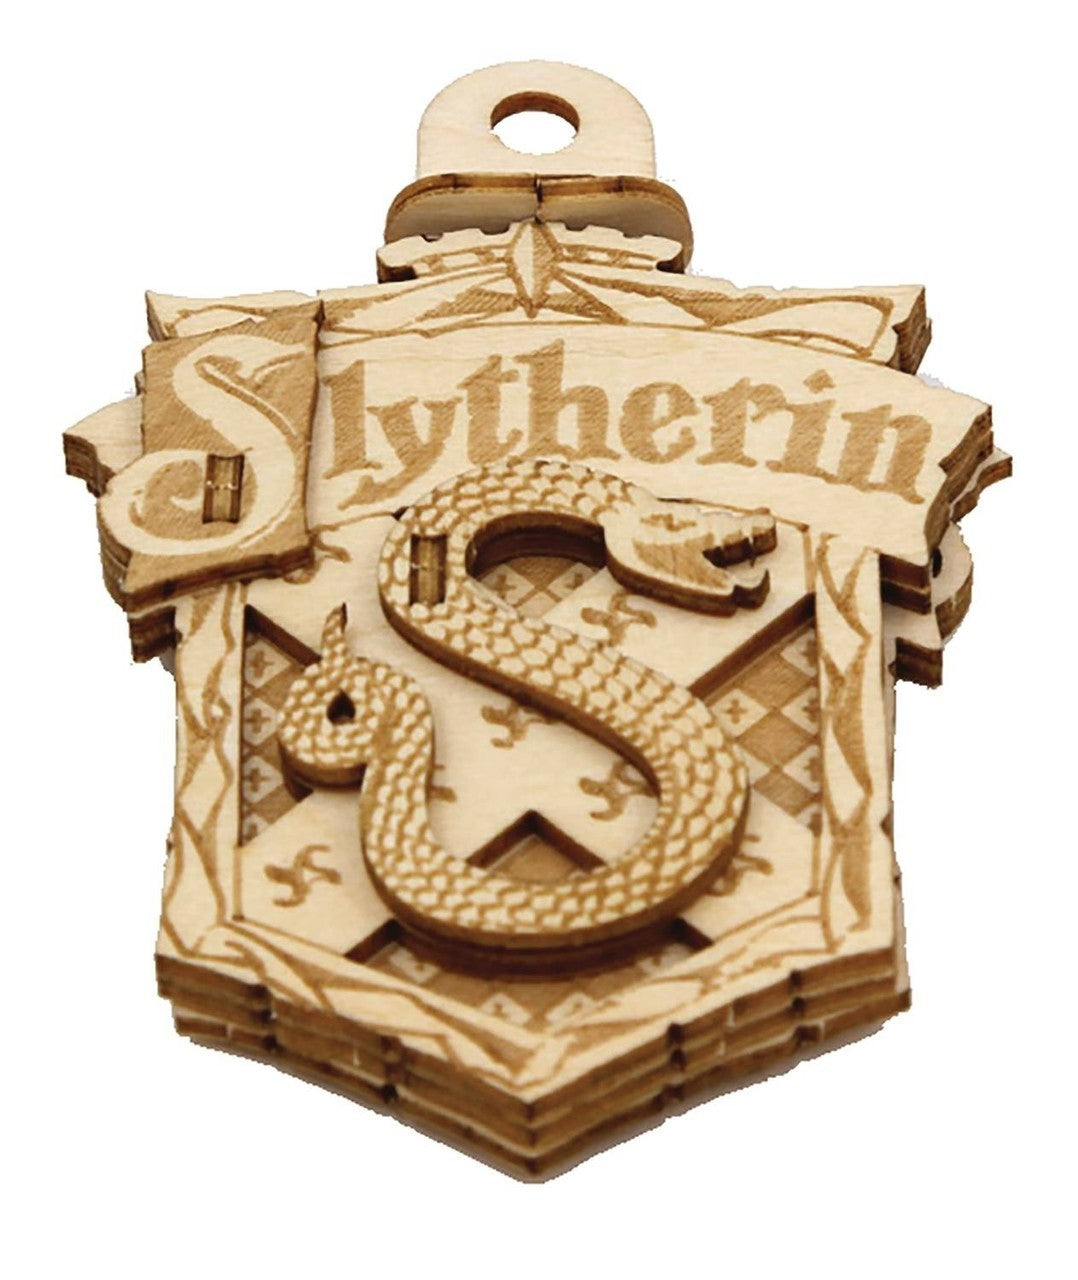 Slytherin - Incredibuilds Emblematics Harry Potter